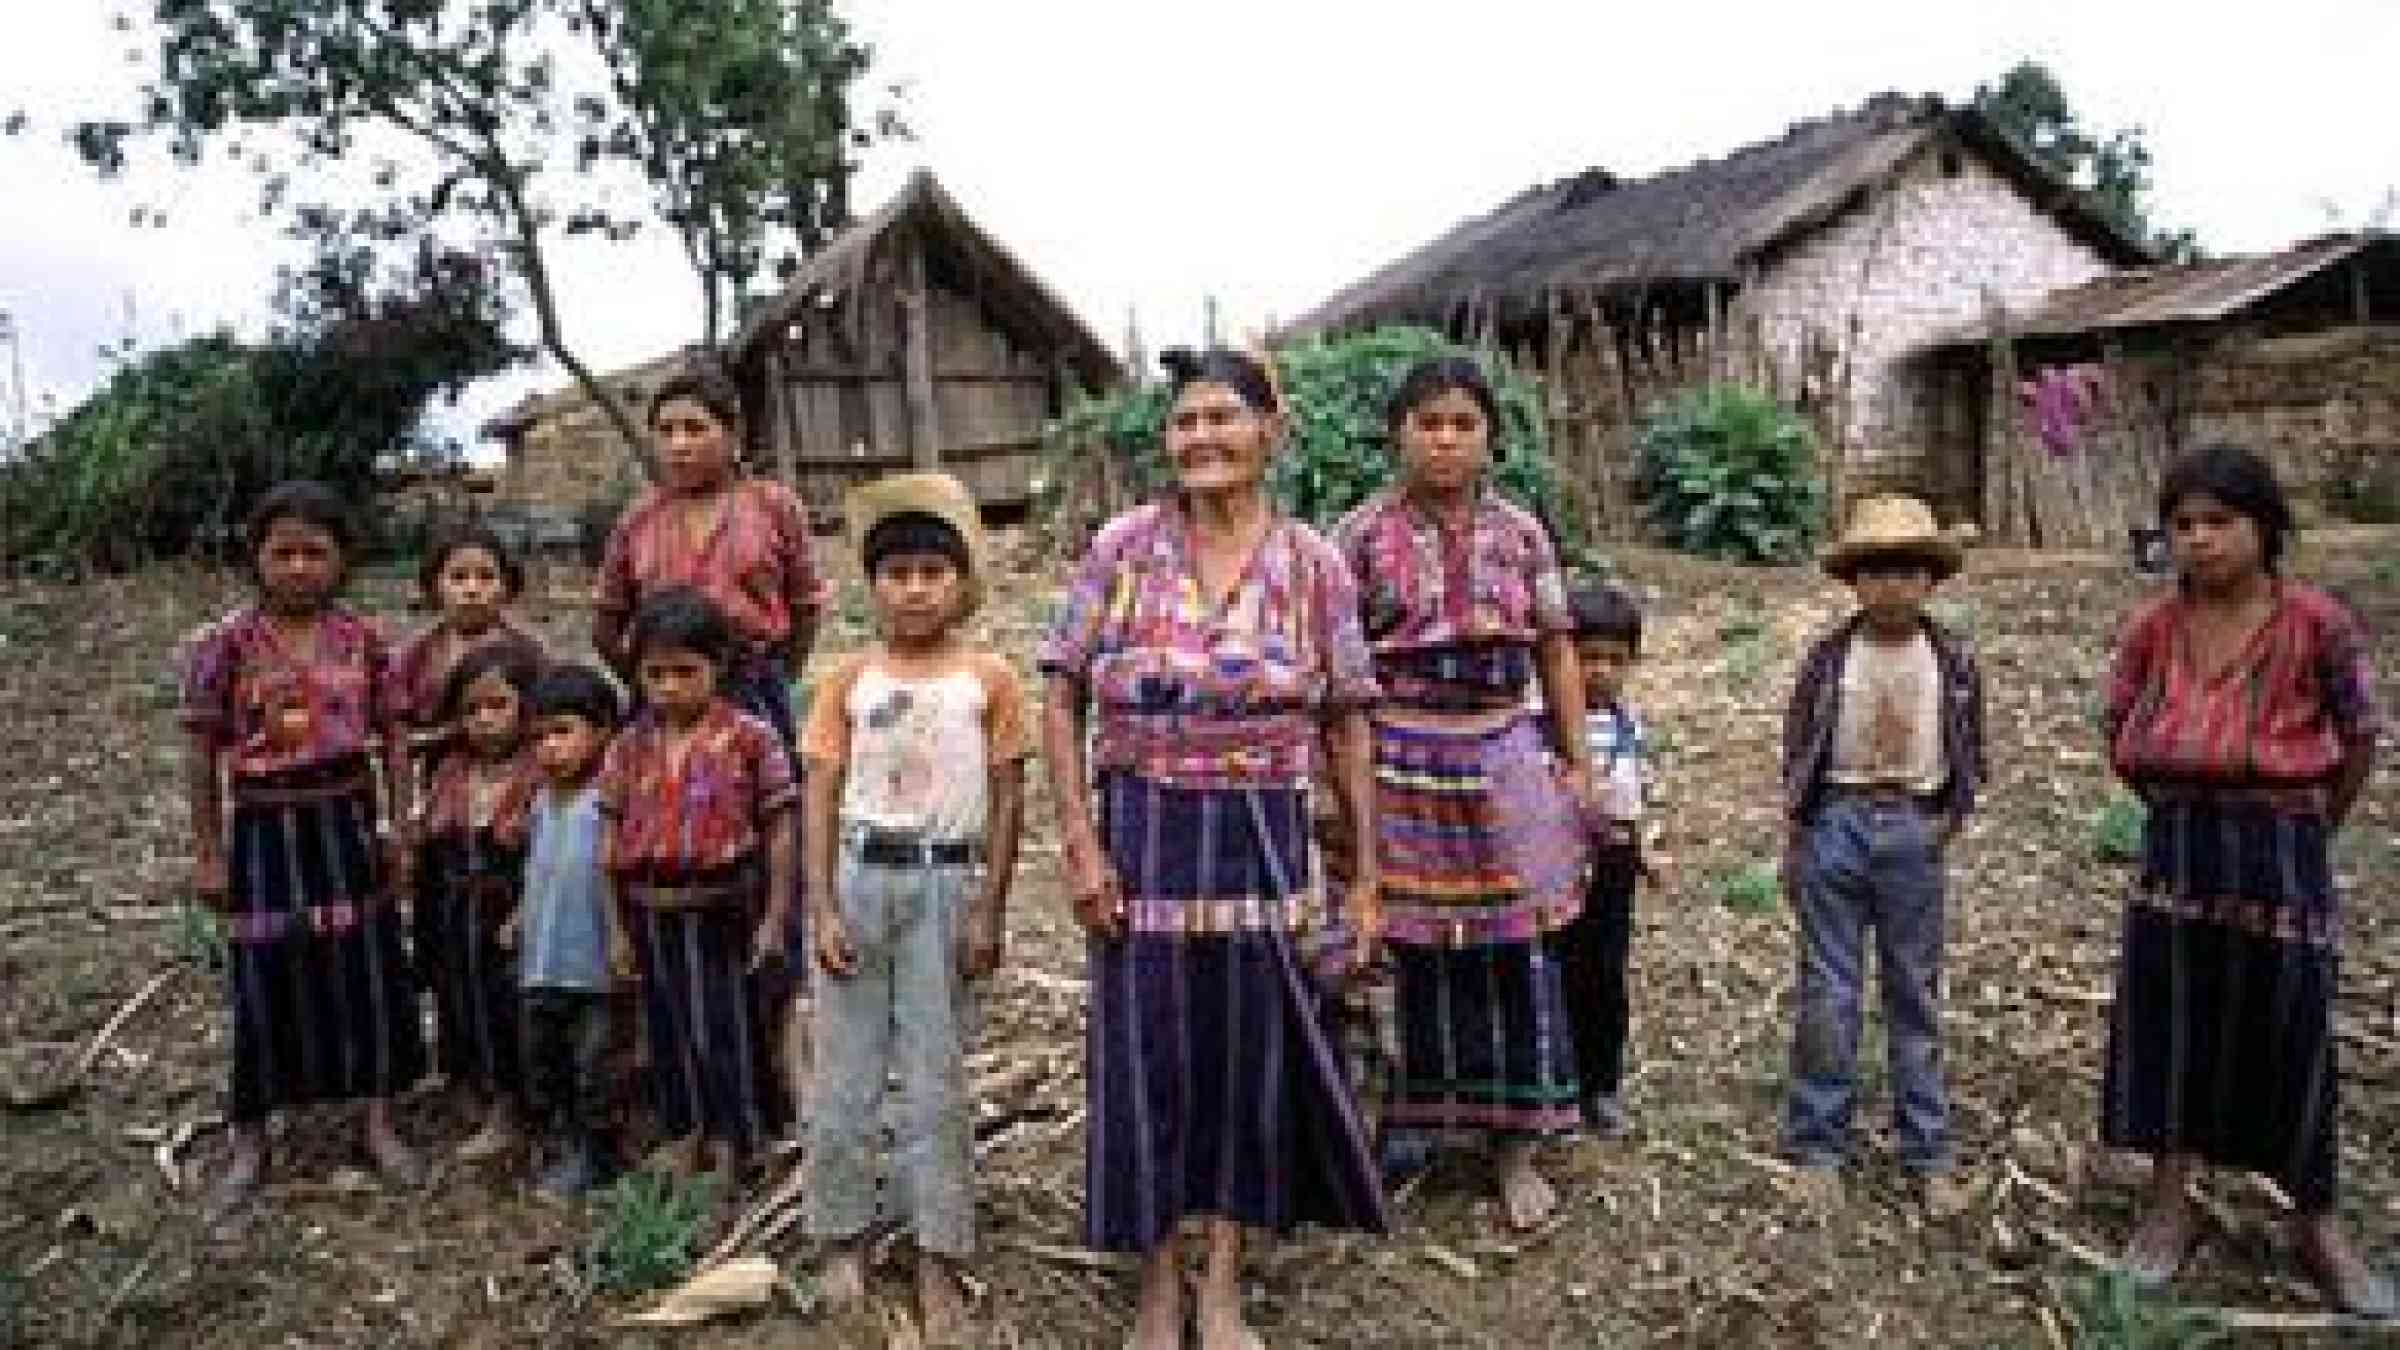 A Cakchiquel family in the hamlet of Patzutzun, Guatemala by UN Photo